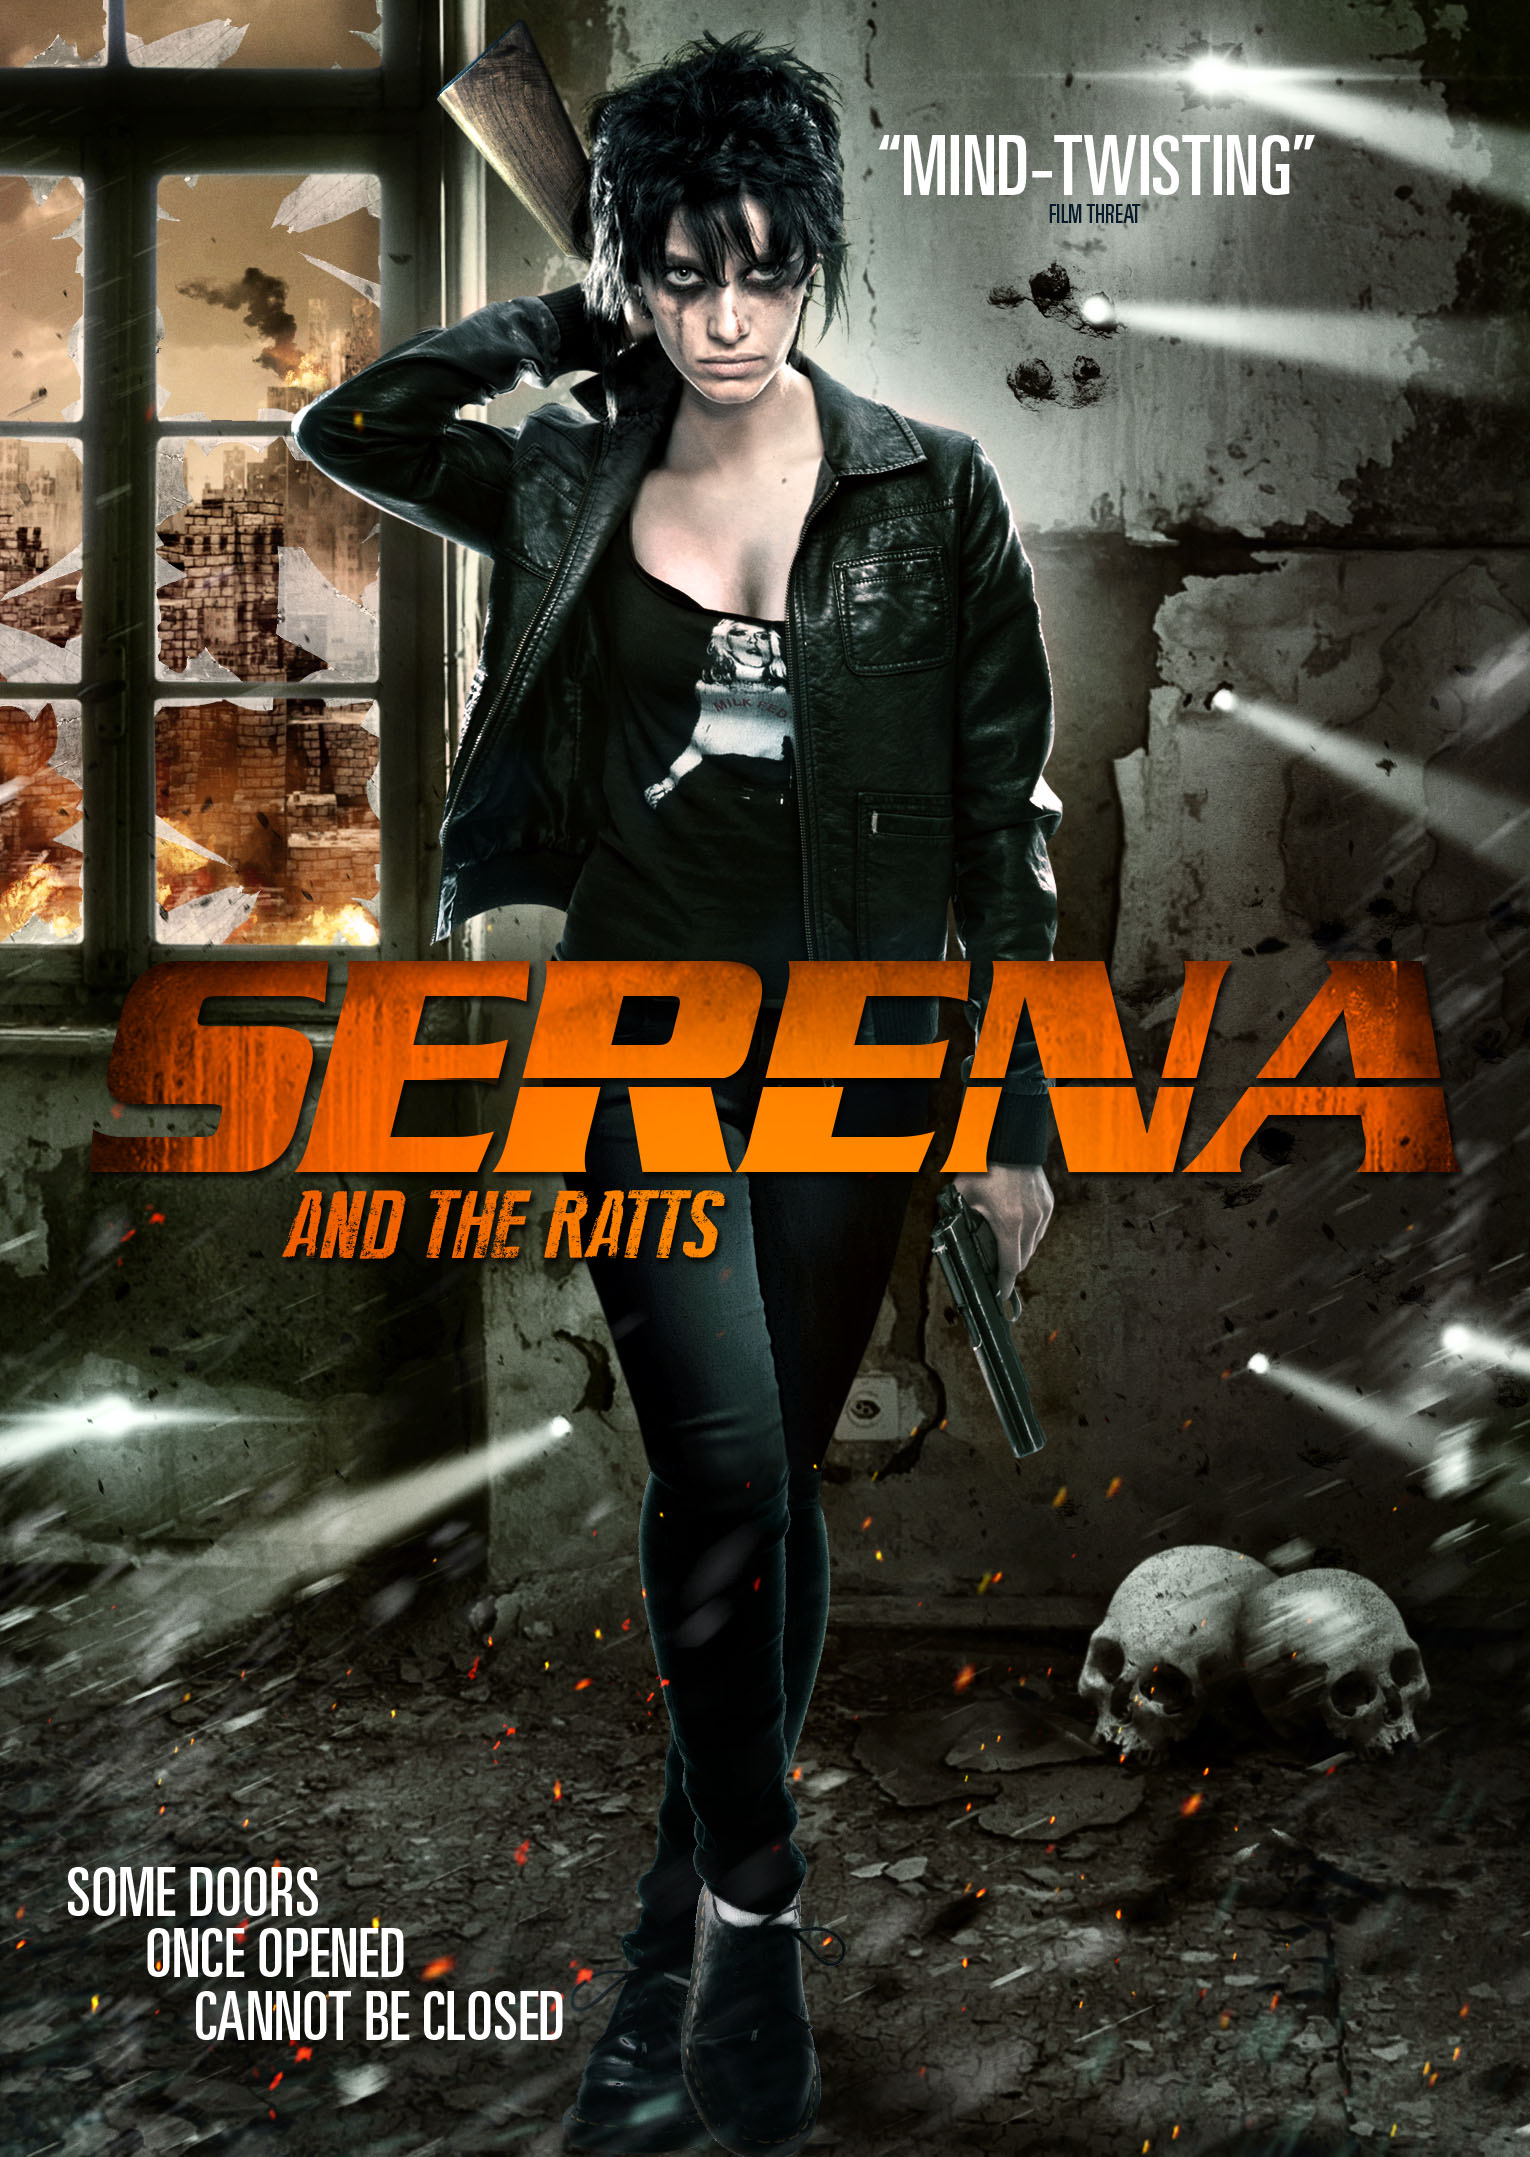 Serena and the Ratts (2012) Screenshot 1